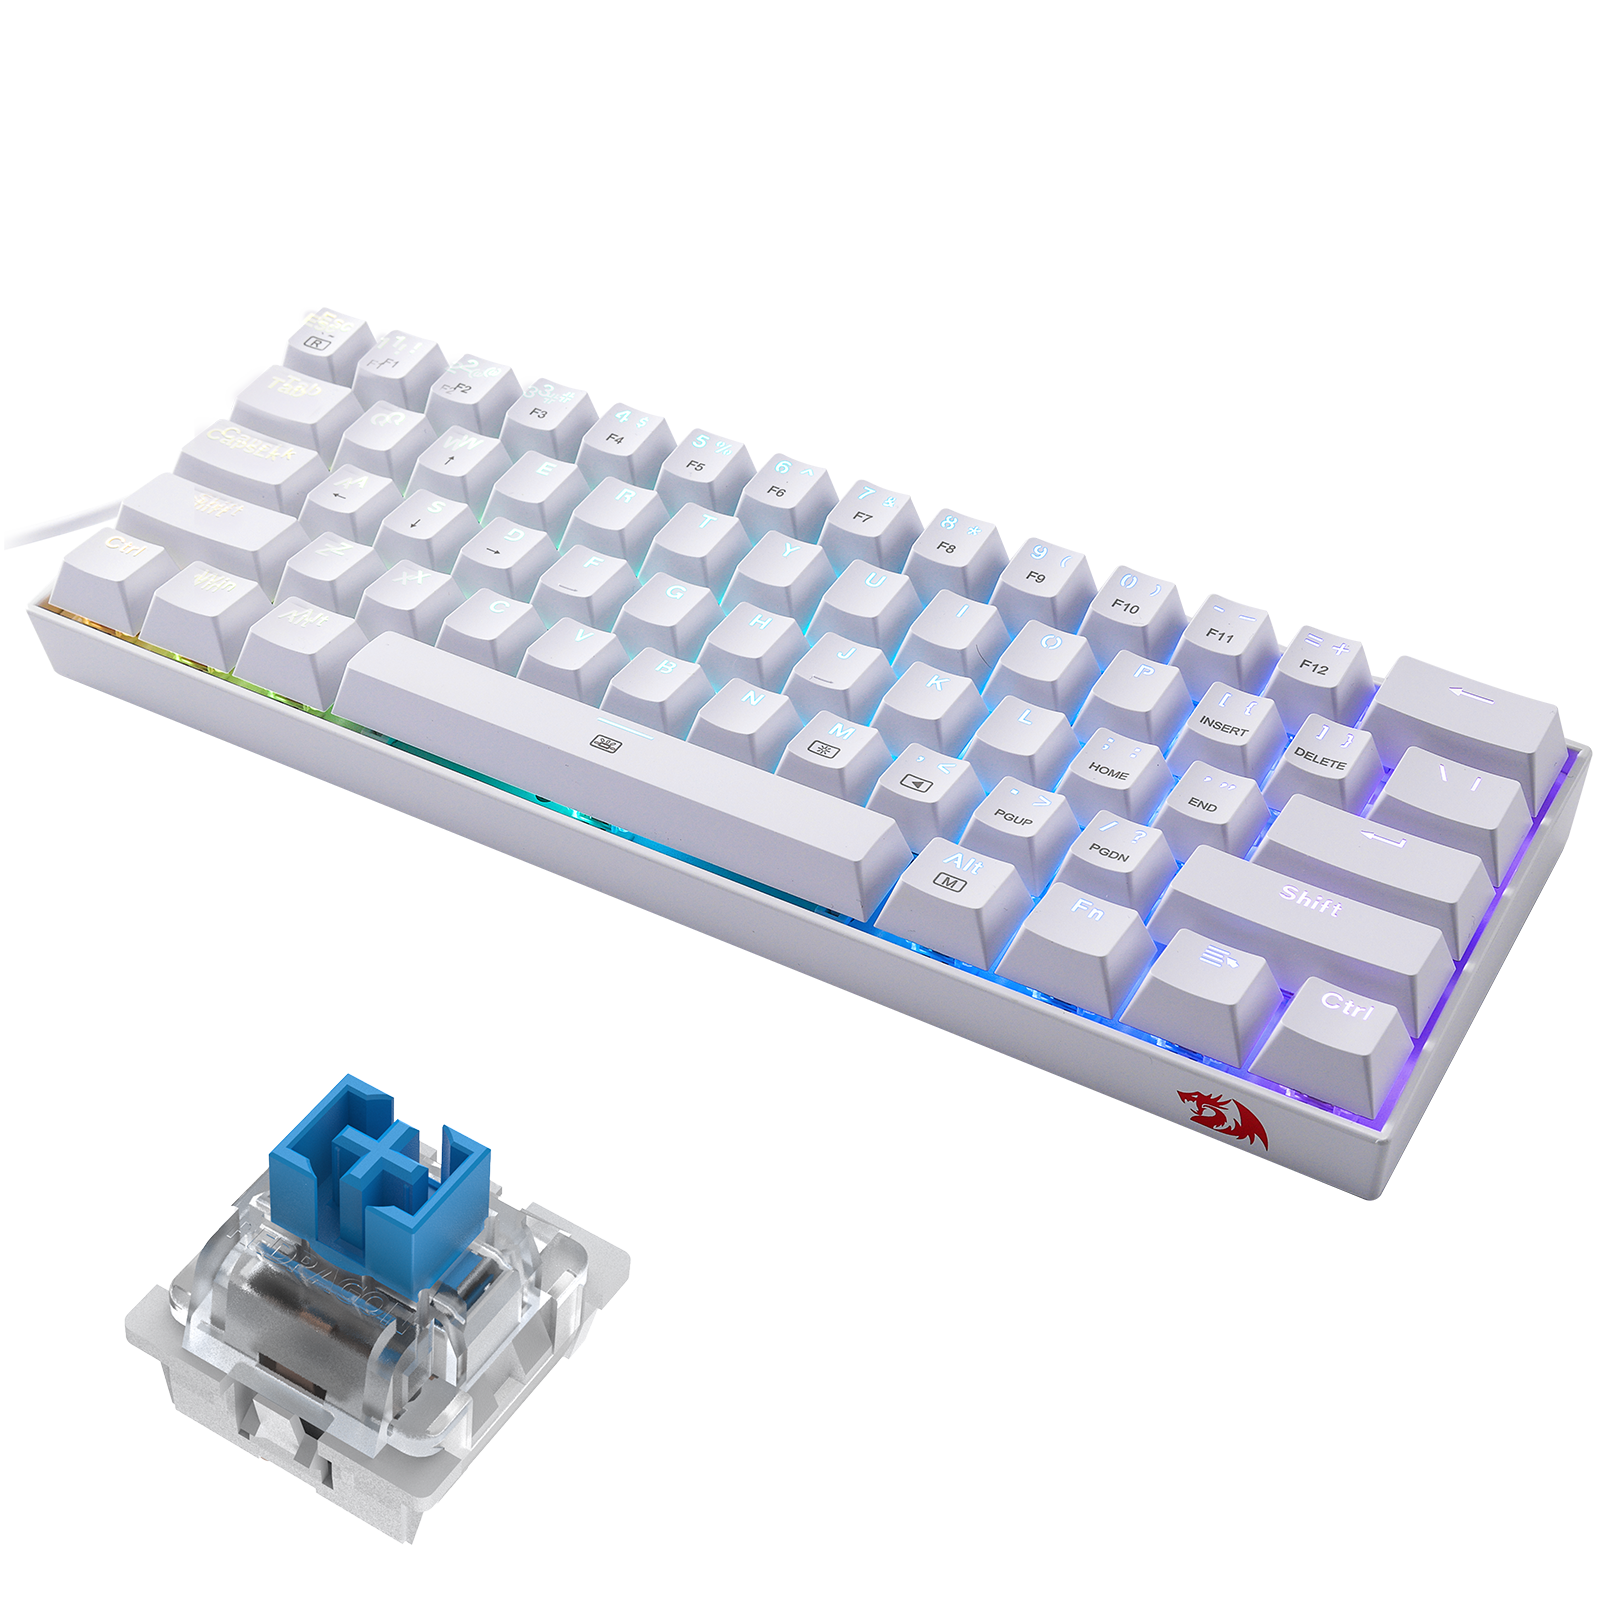 Redragon K630 60% RGB Wired Mechanical Keyboard, Blue Switch